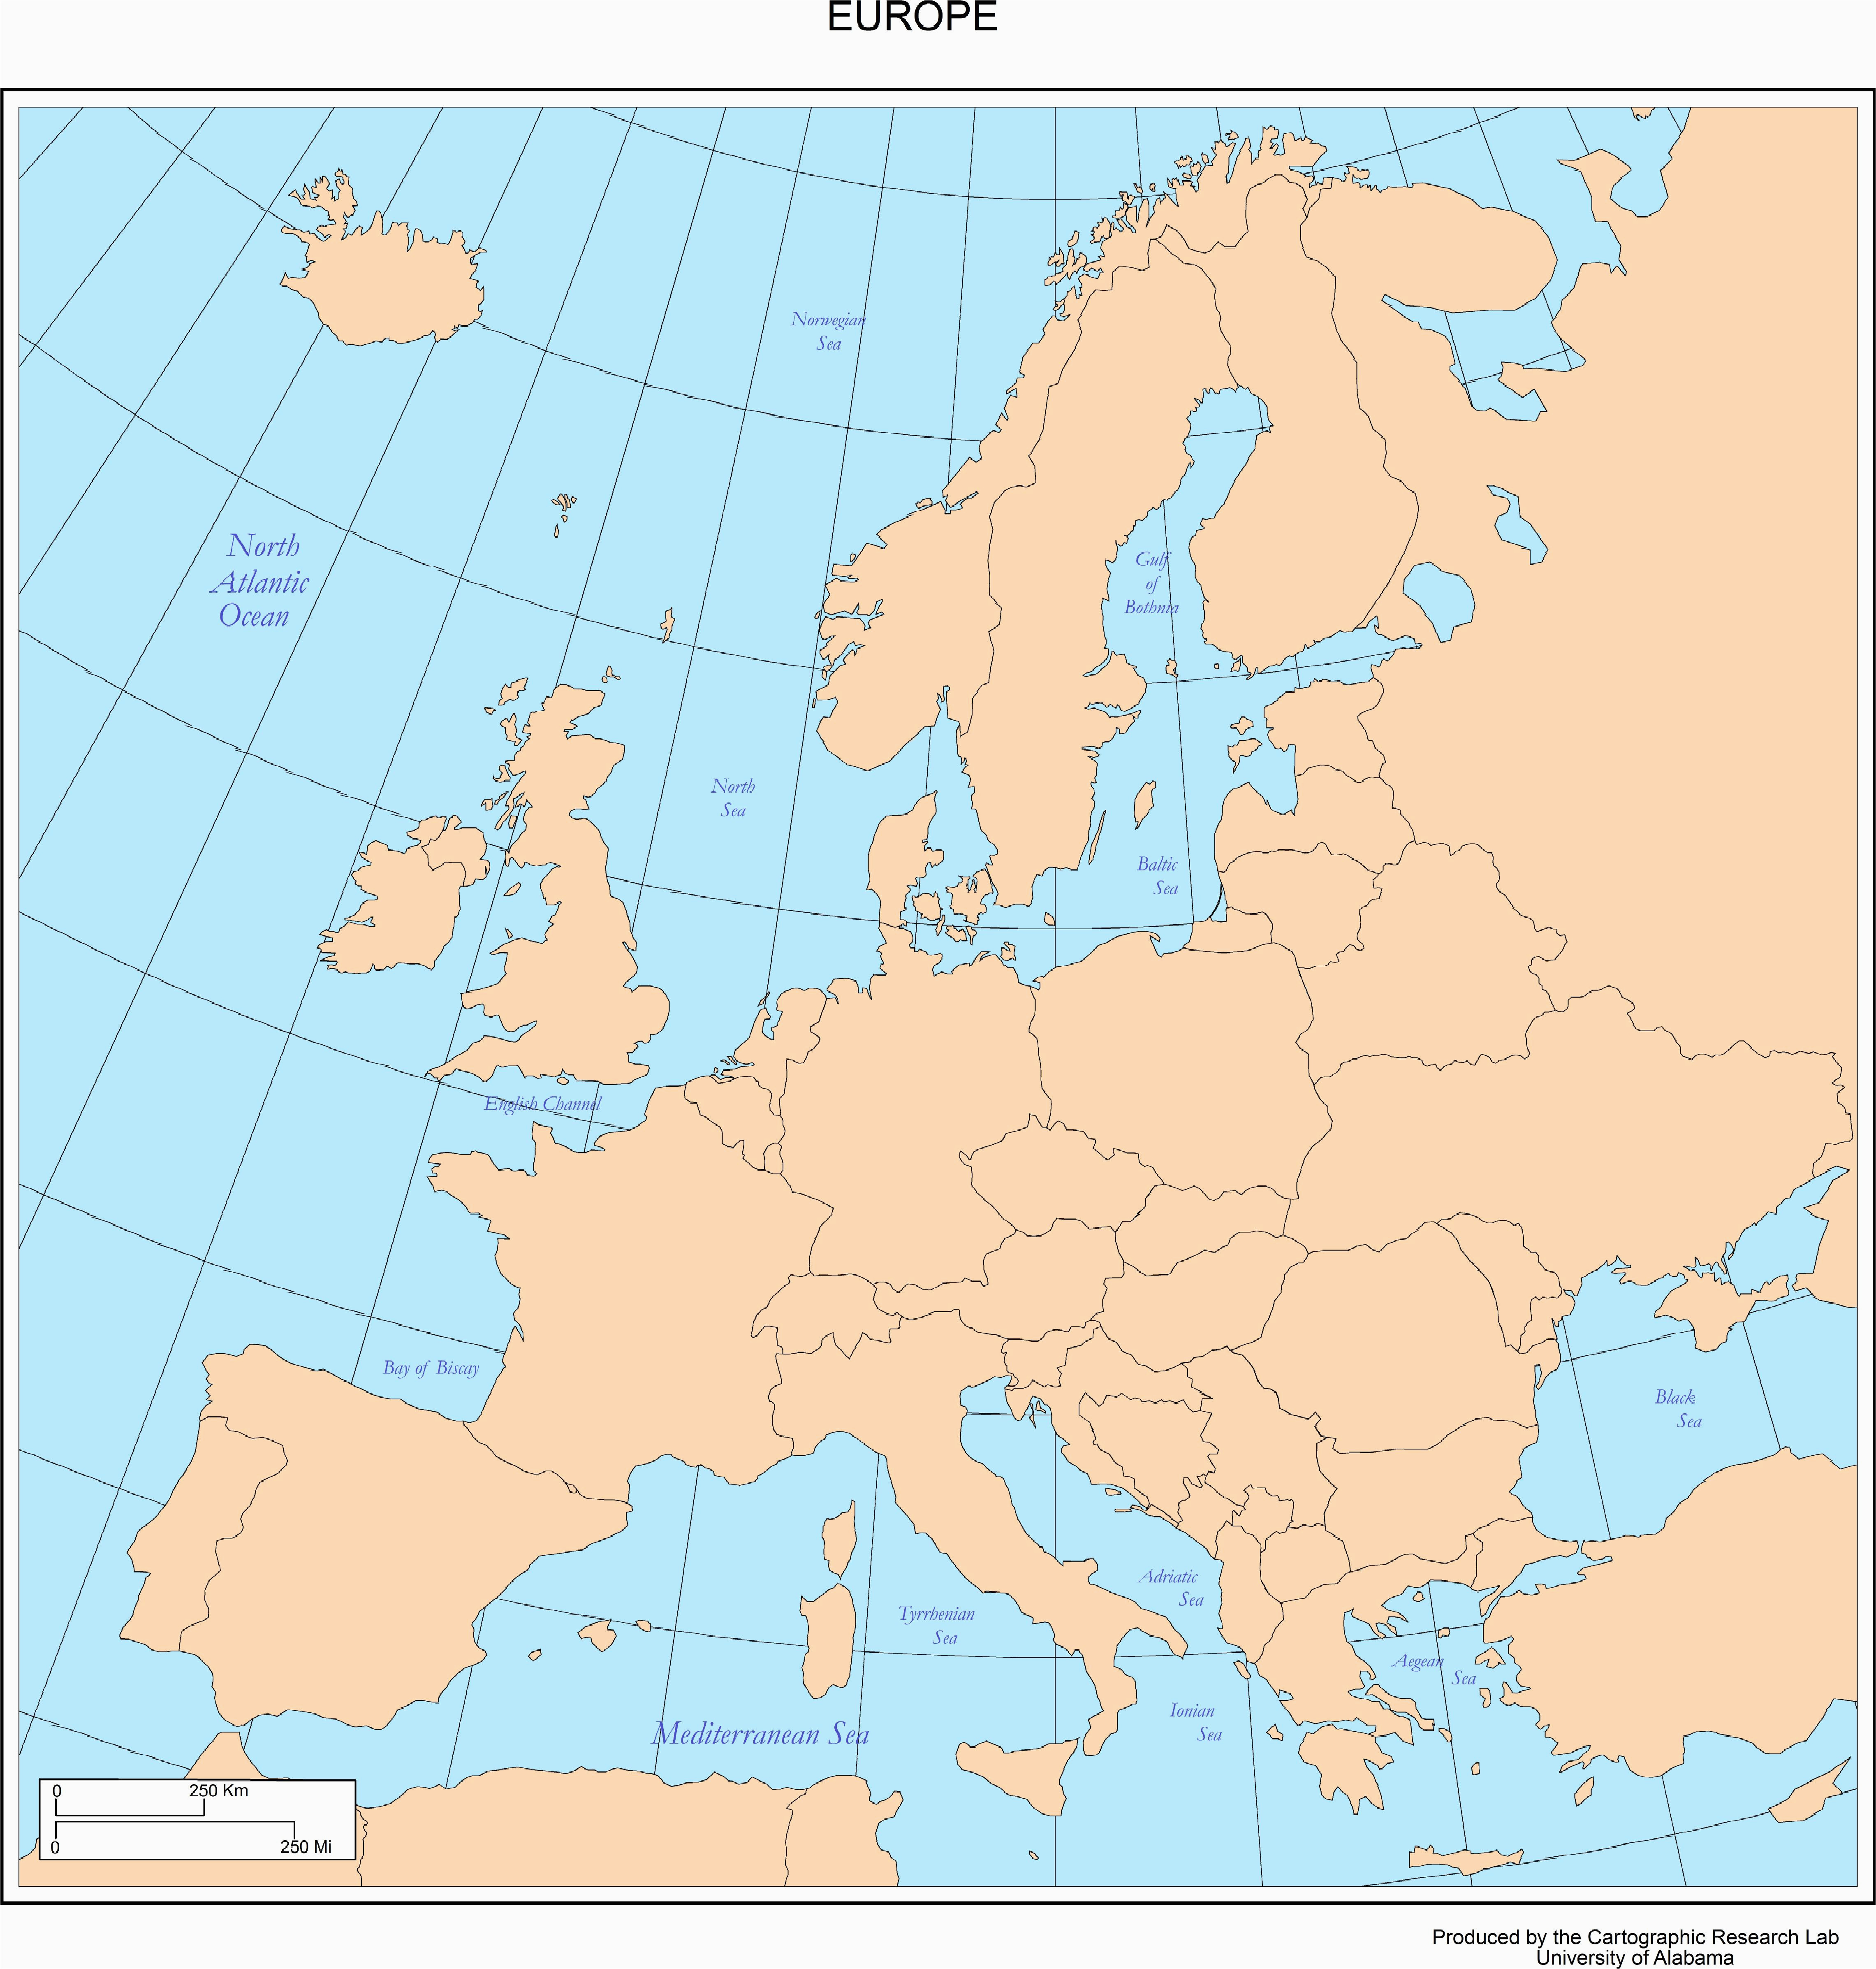 28 thorough europe map w countries